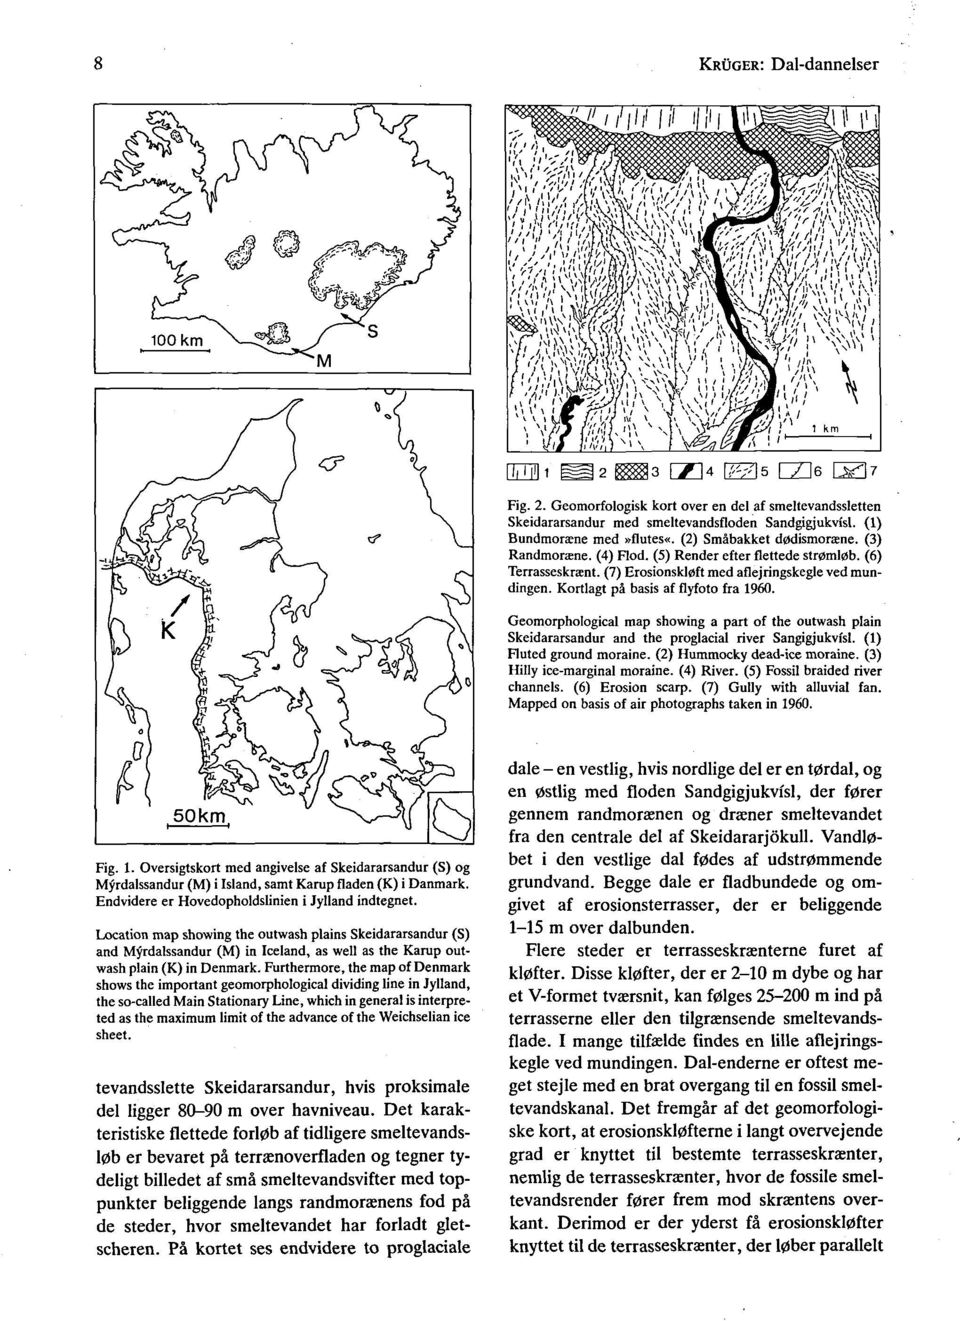 Geomorphological map showing a part of the outwash plain Skeidararsandur and the proglacial river Sangigjukvisl. (1) Fluted ground moraine. (2) Hummocky dead-ice moraine.